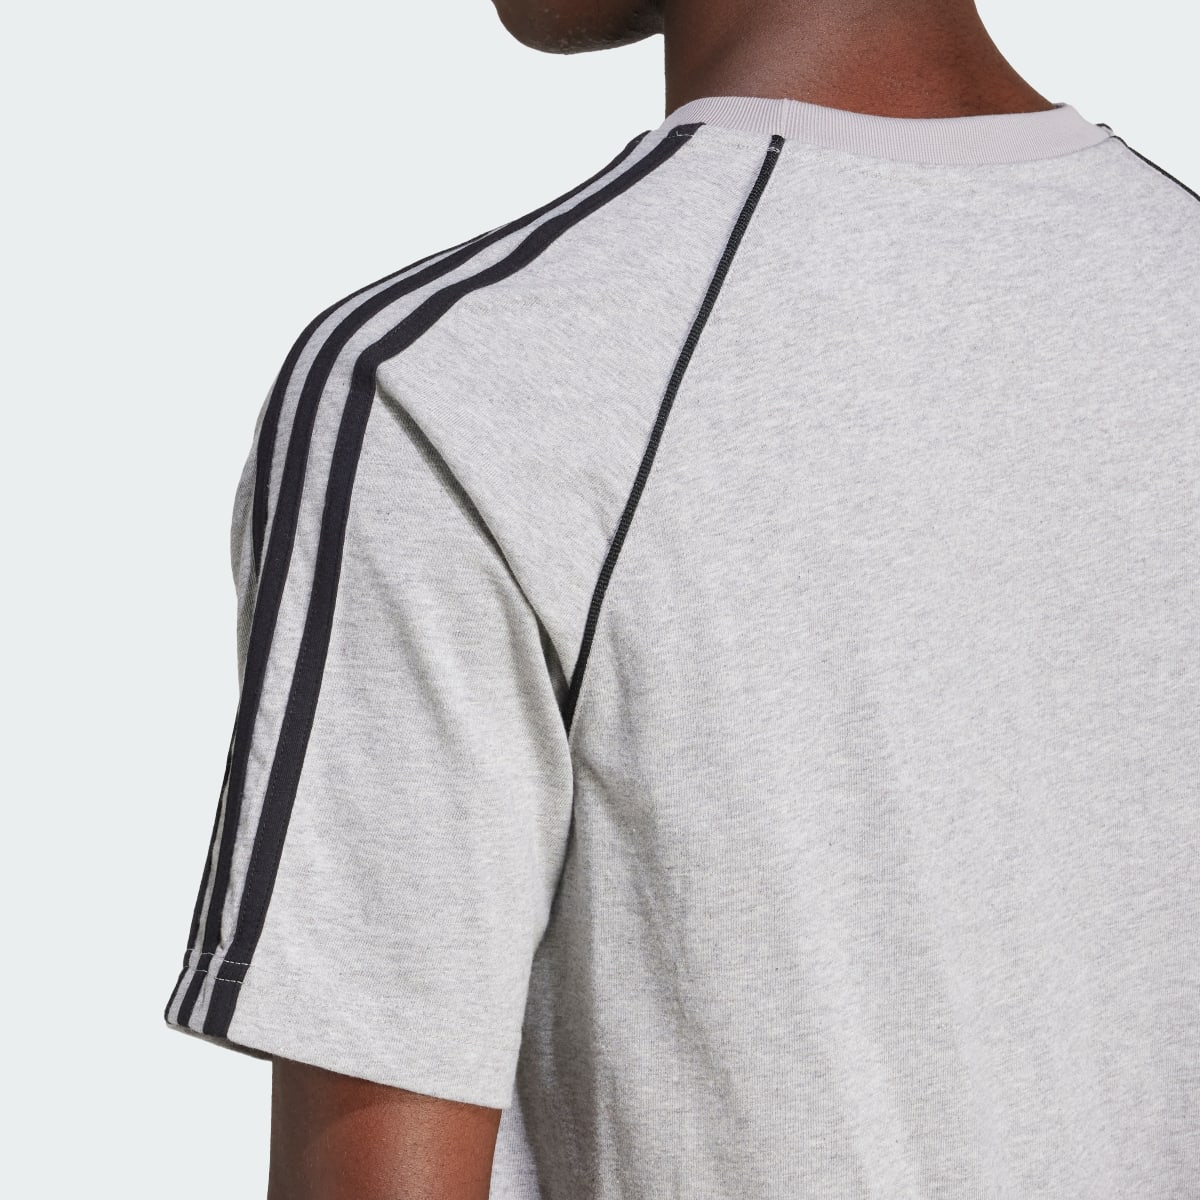 Adidas SST T-Shirt. 7